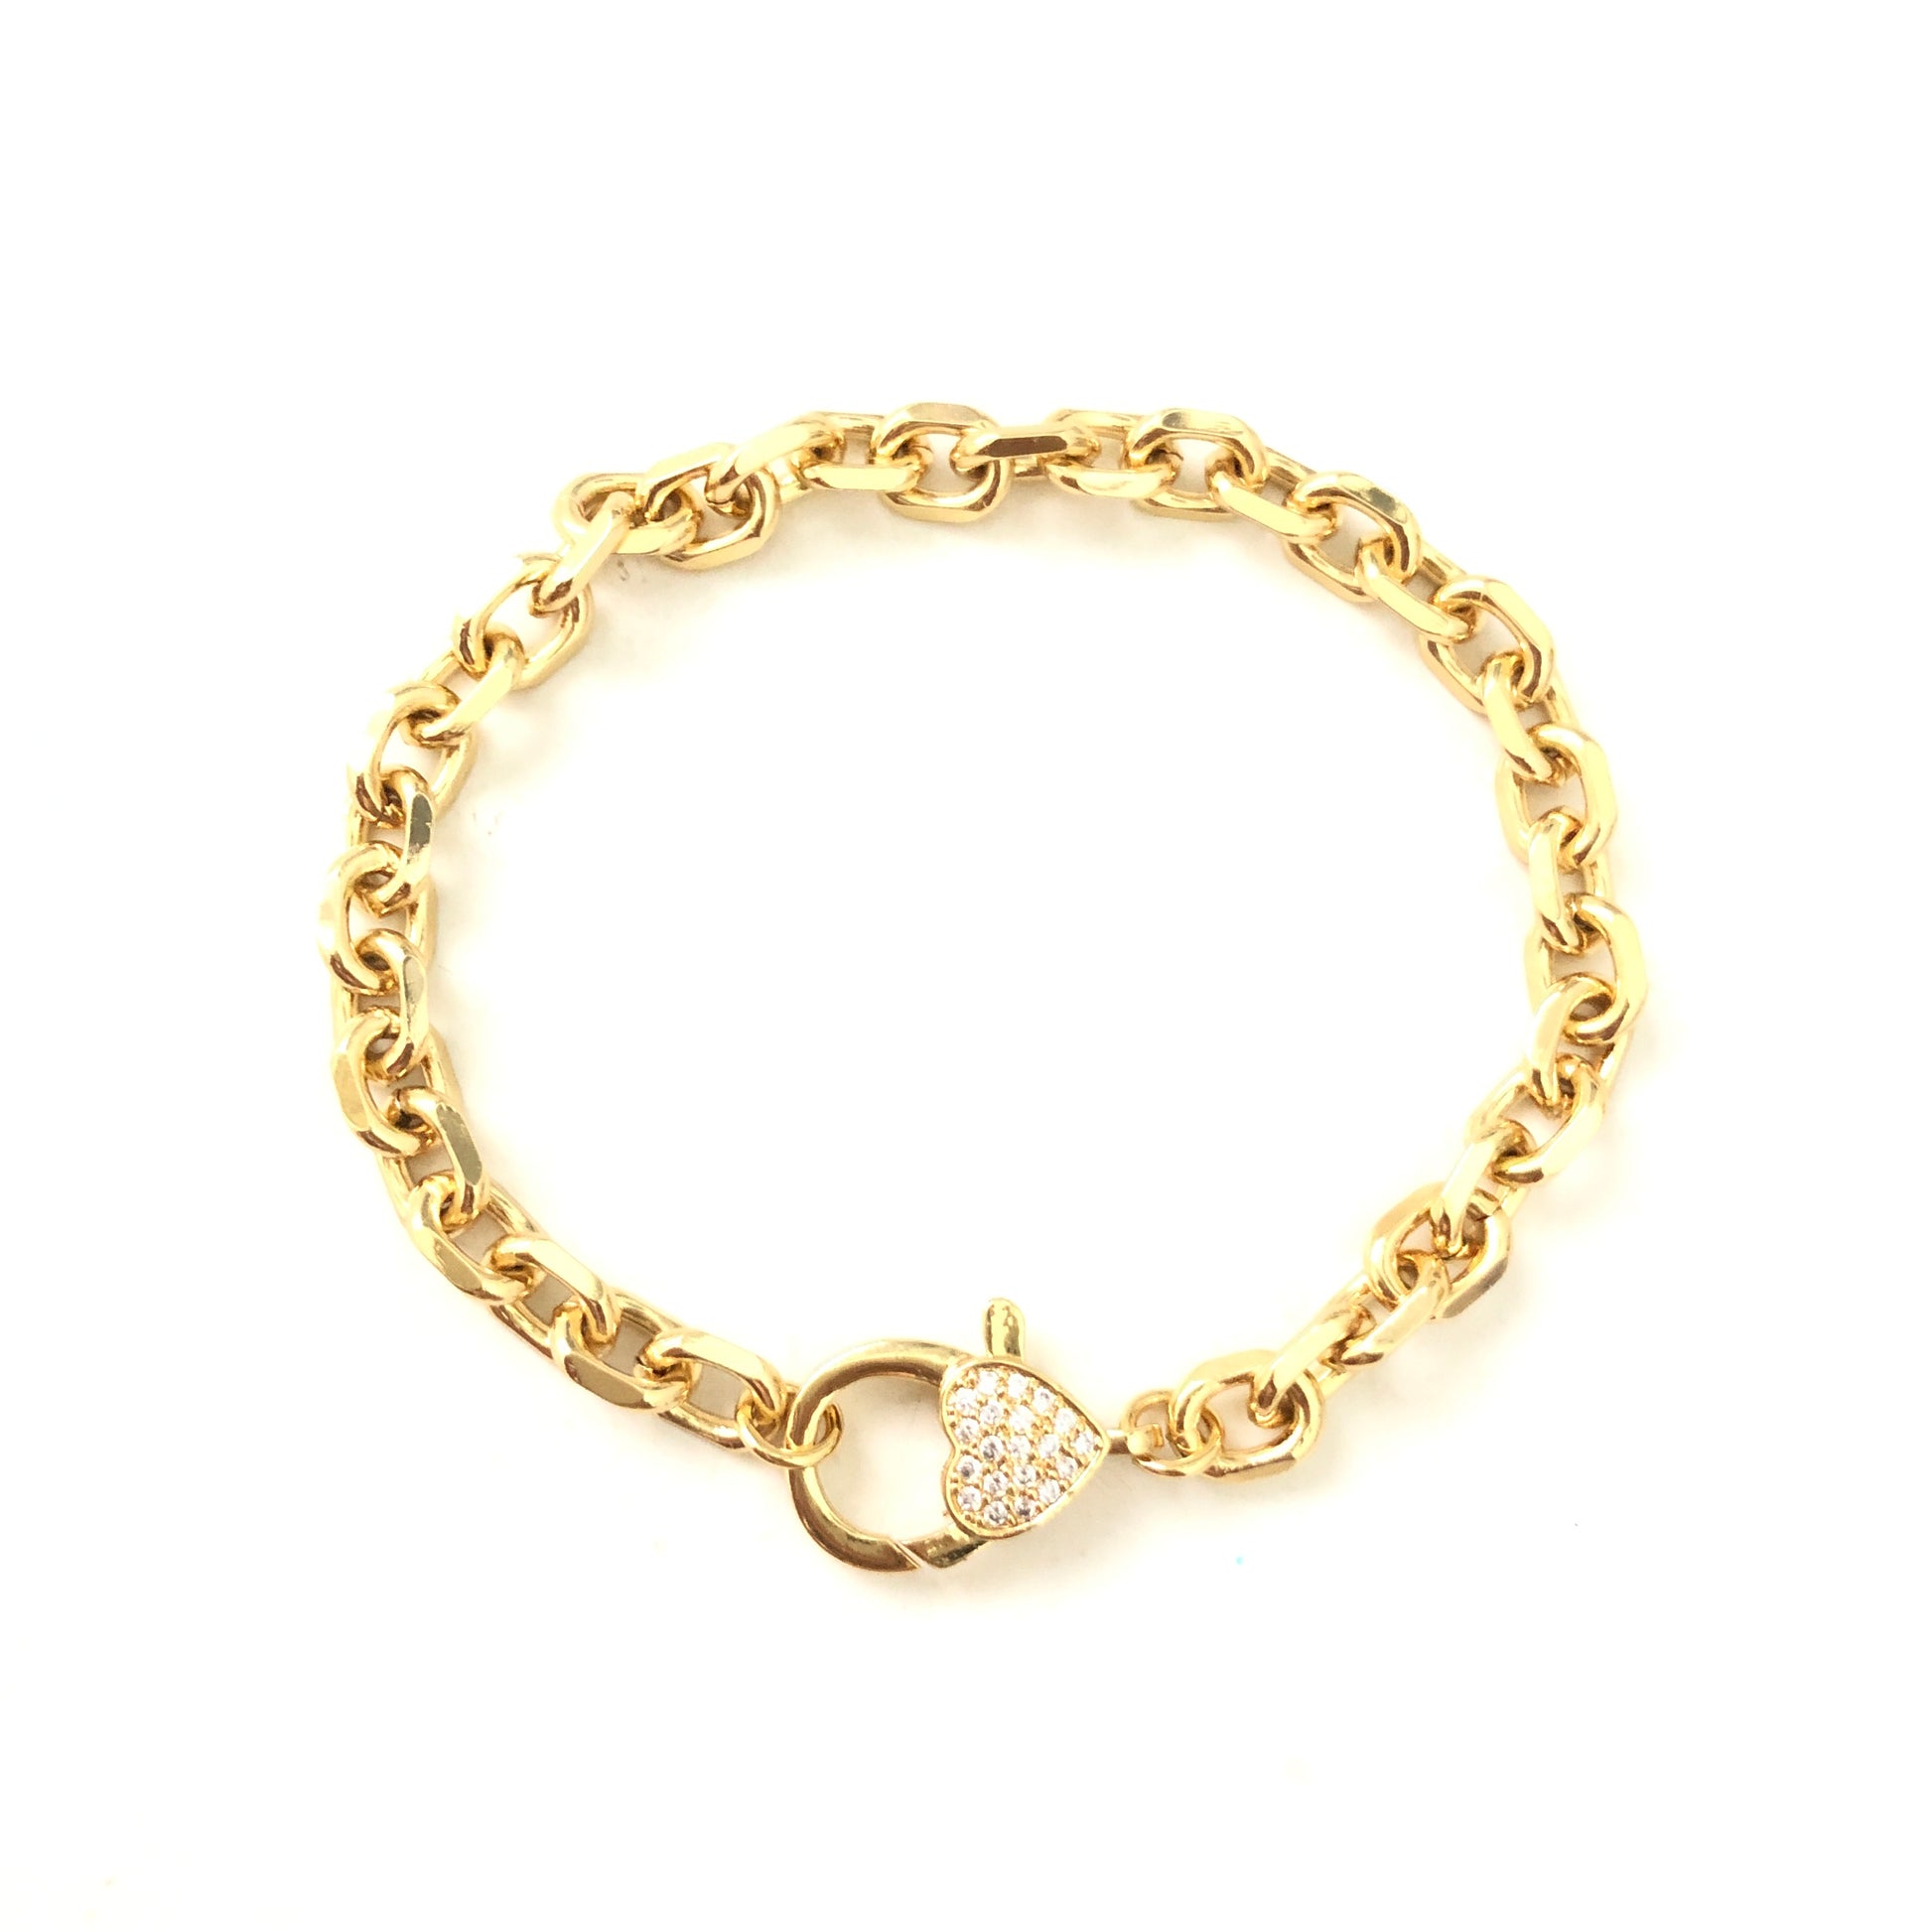 5pcs/lot 7/8/9 inch Heart Clasp Gold Plated Chain Bracelet Women Bracelets Charms Beads Beyond